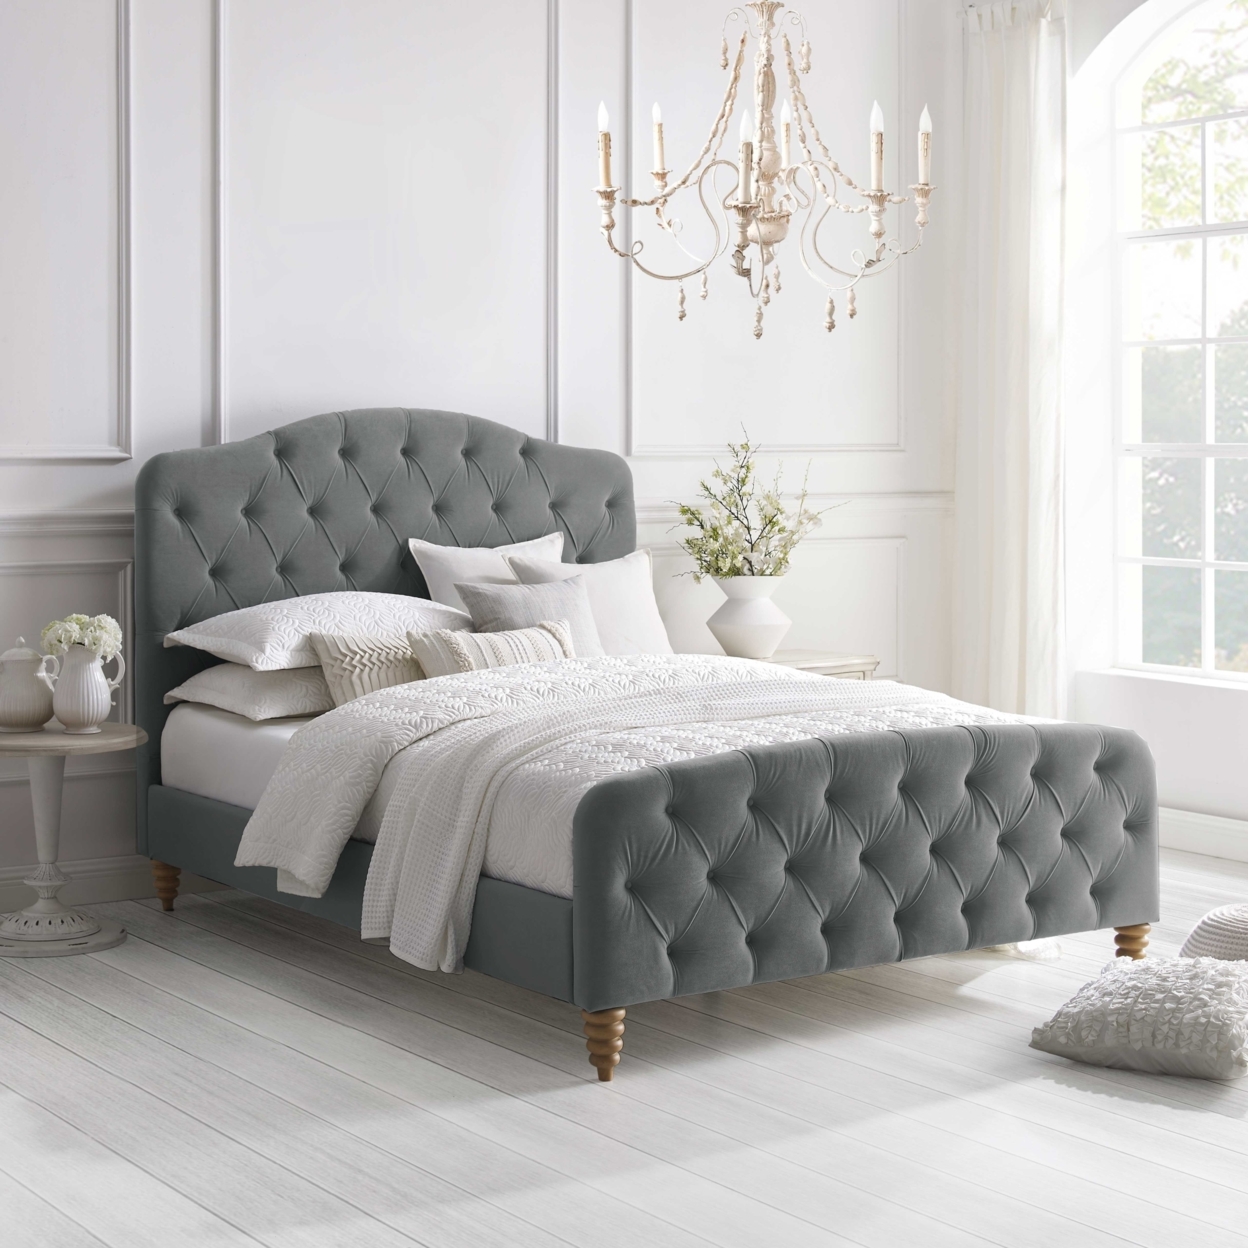 Adilene Bed-Diamond Tufted Headboard And Footboard-Upholstered-Slats Included - Grey, Twin